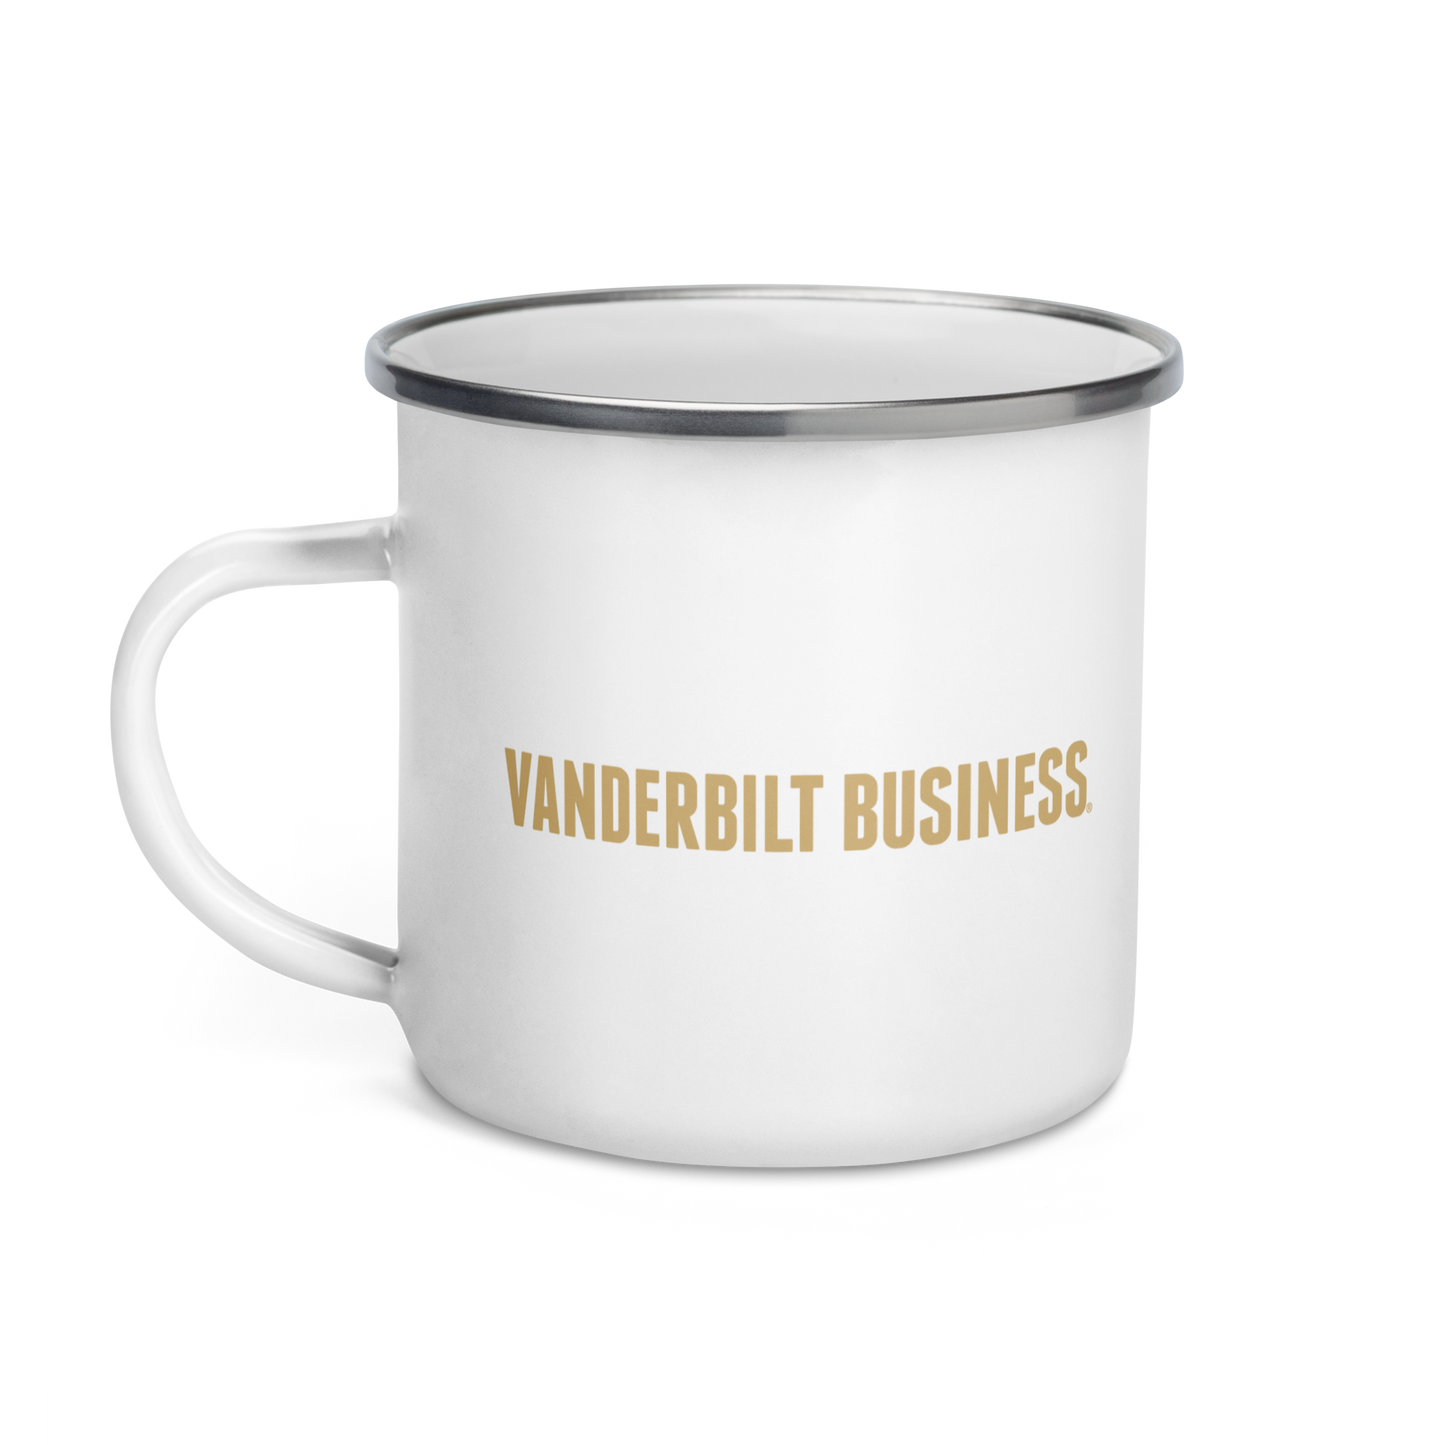 Vanderbilt Business Enamel Mug